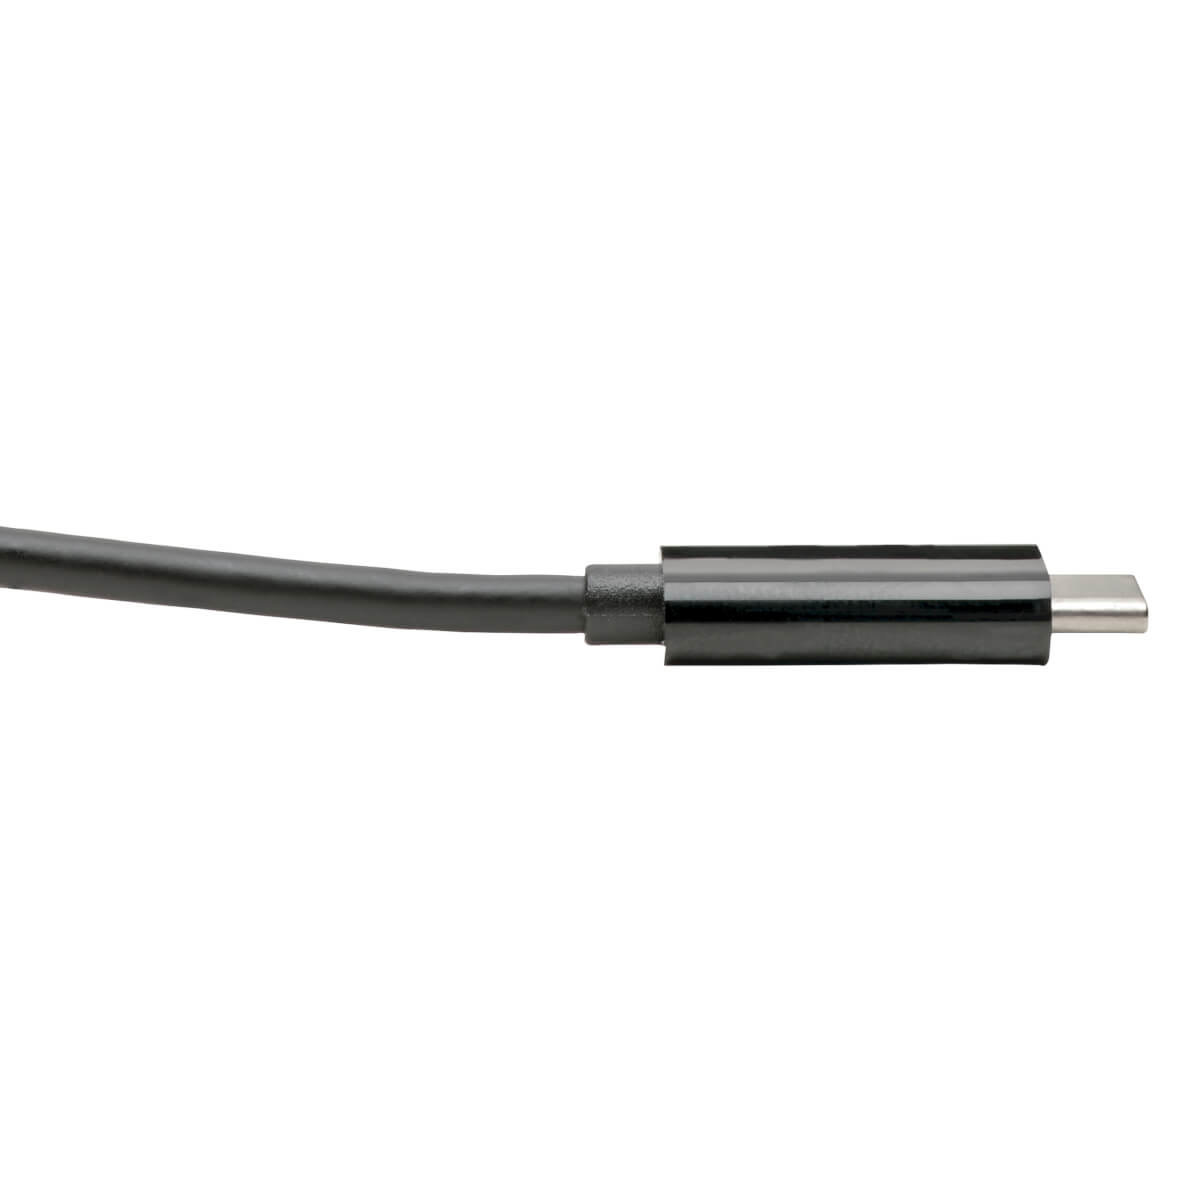 USB-C Multiport Adapter Black